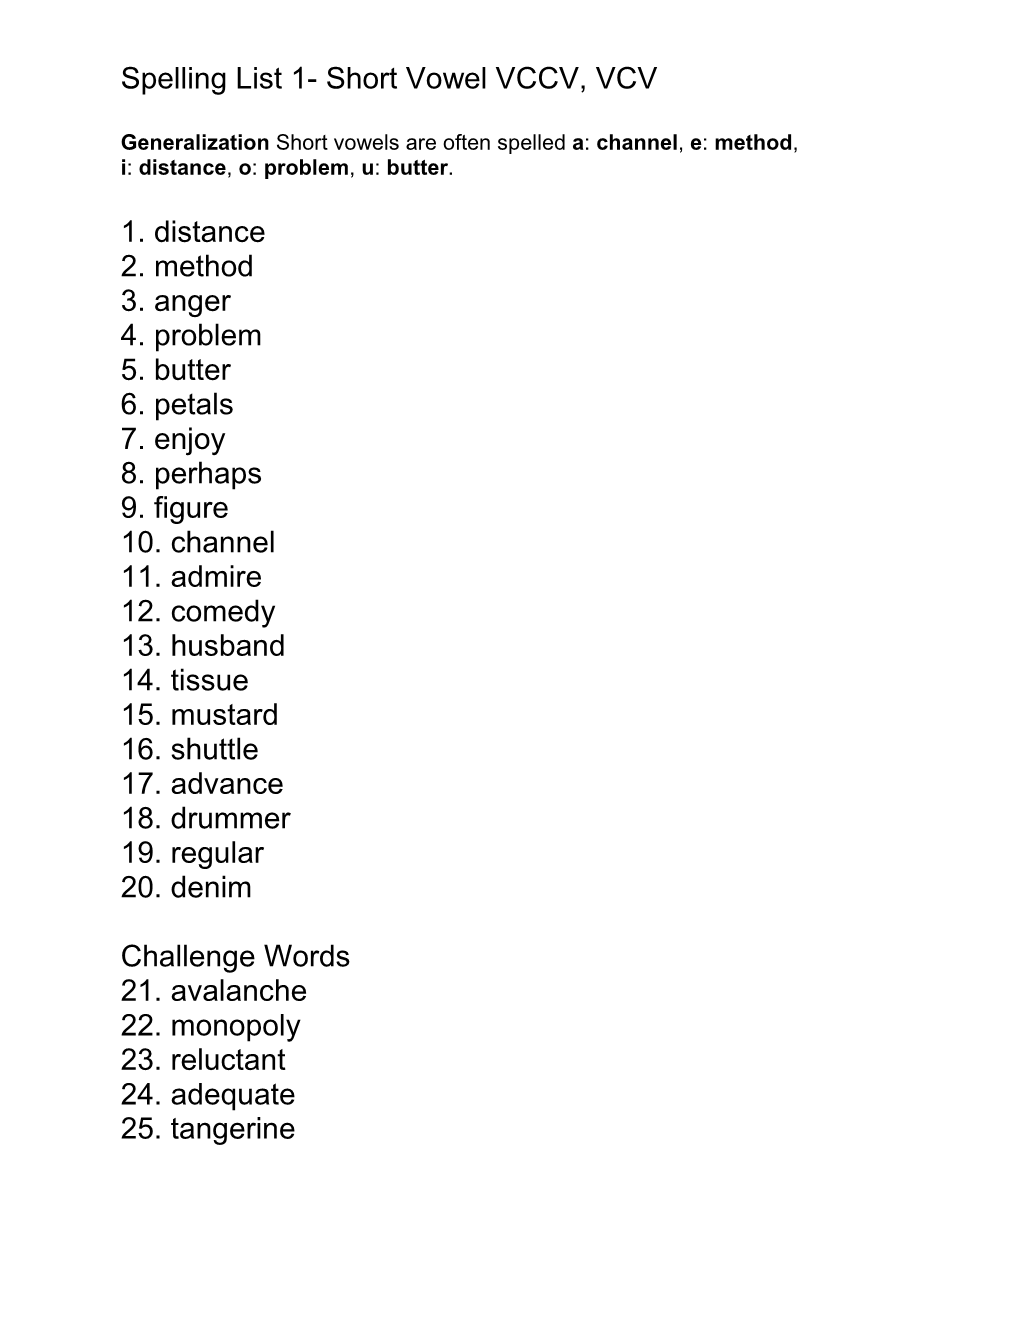 Spelling List 1- Short Vowel VCCV, VCV 1. Distance 2. Method 3. Anger